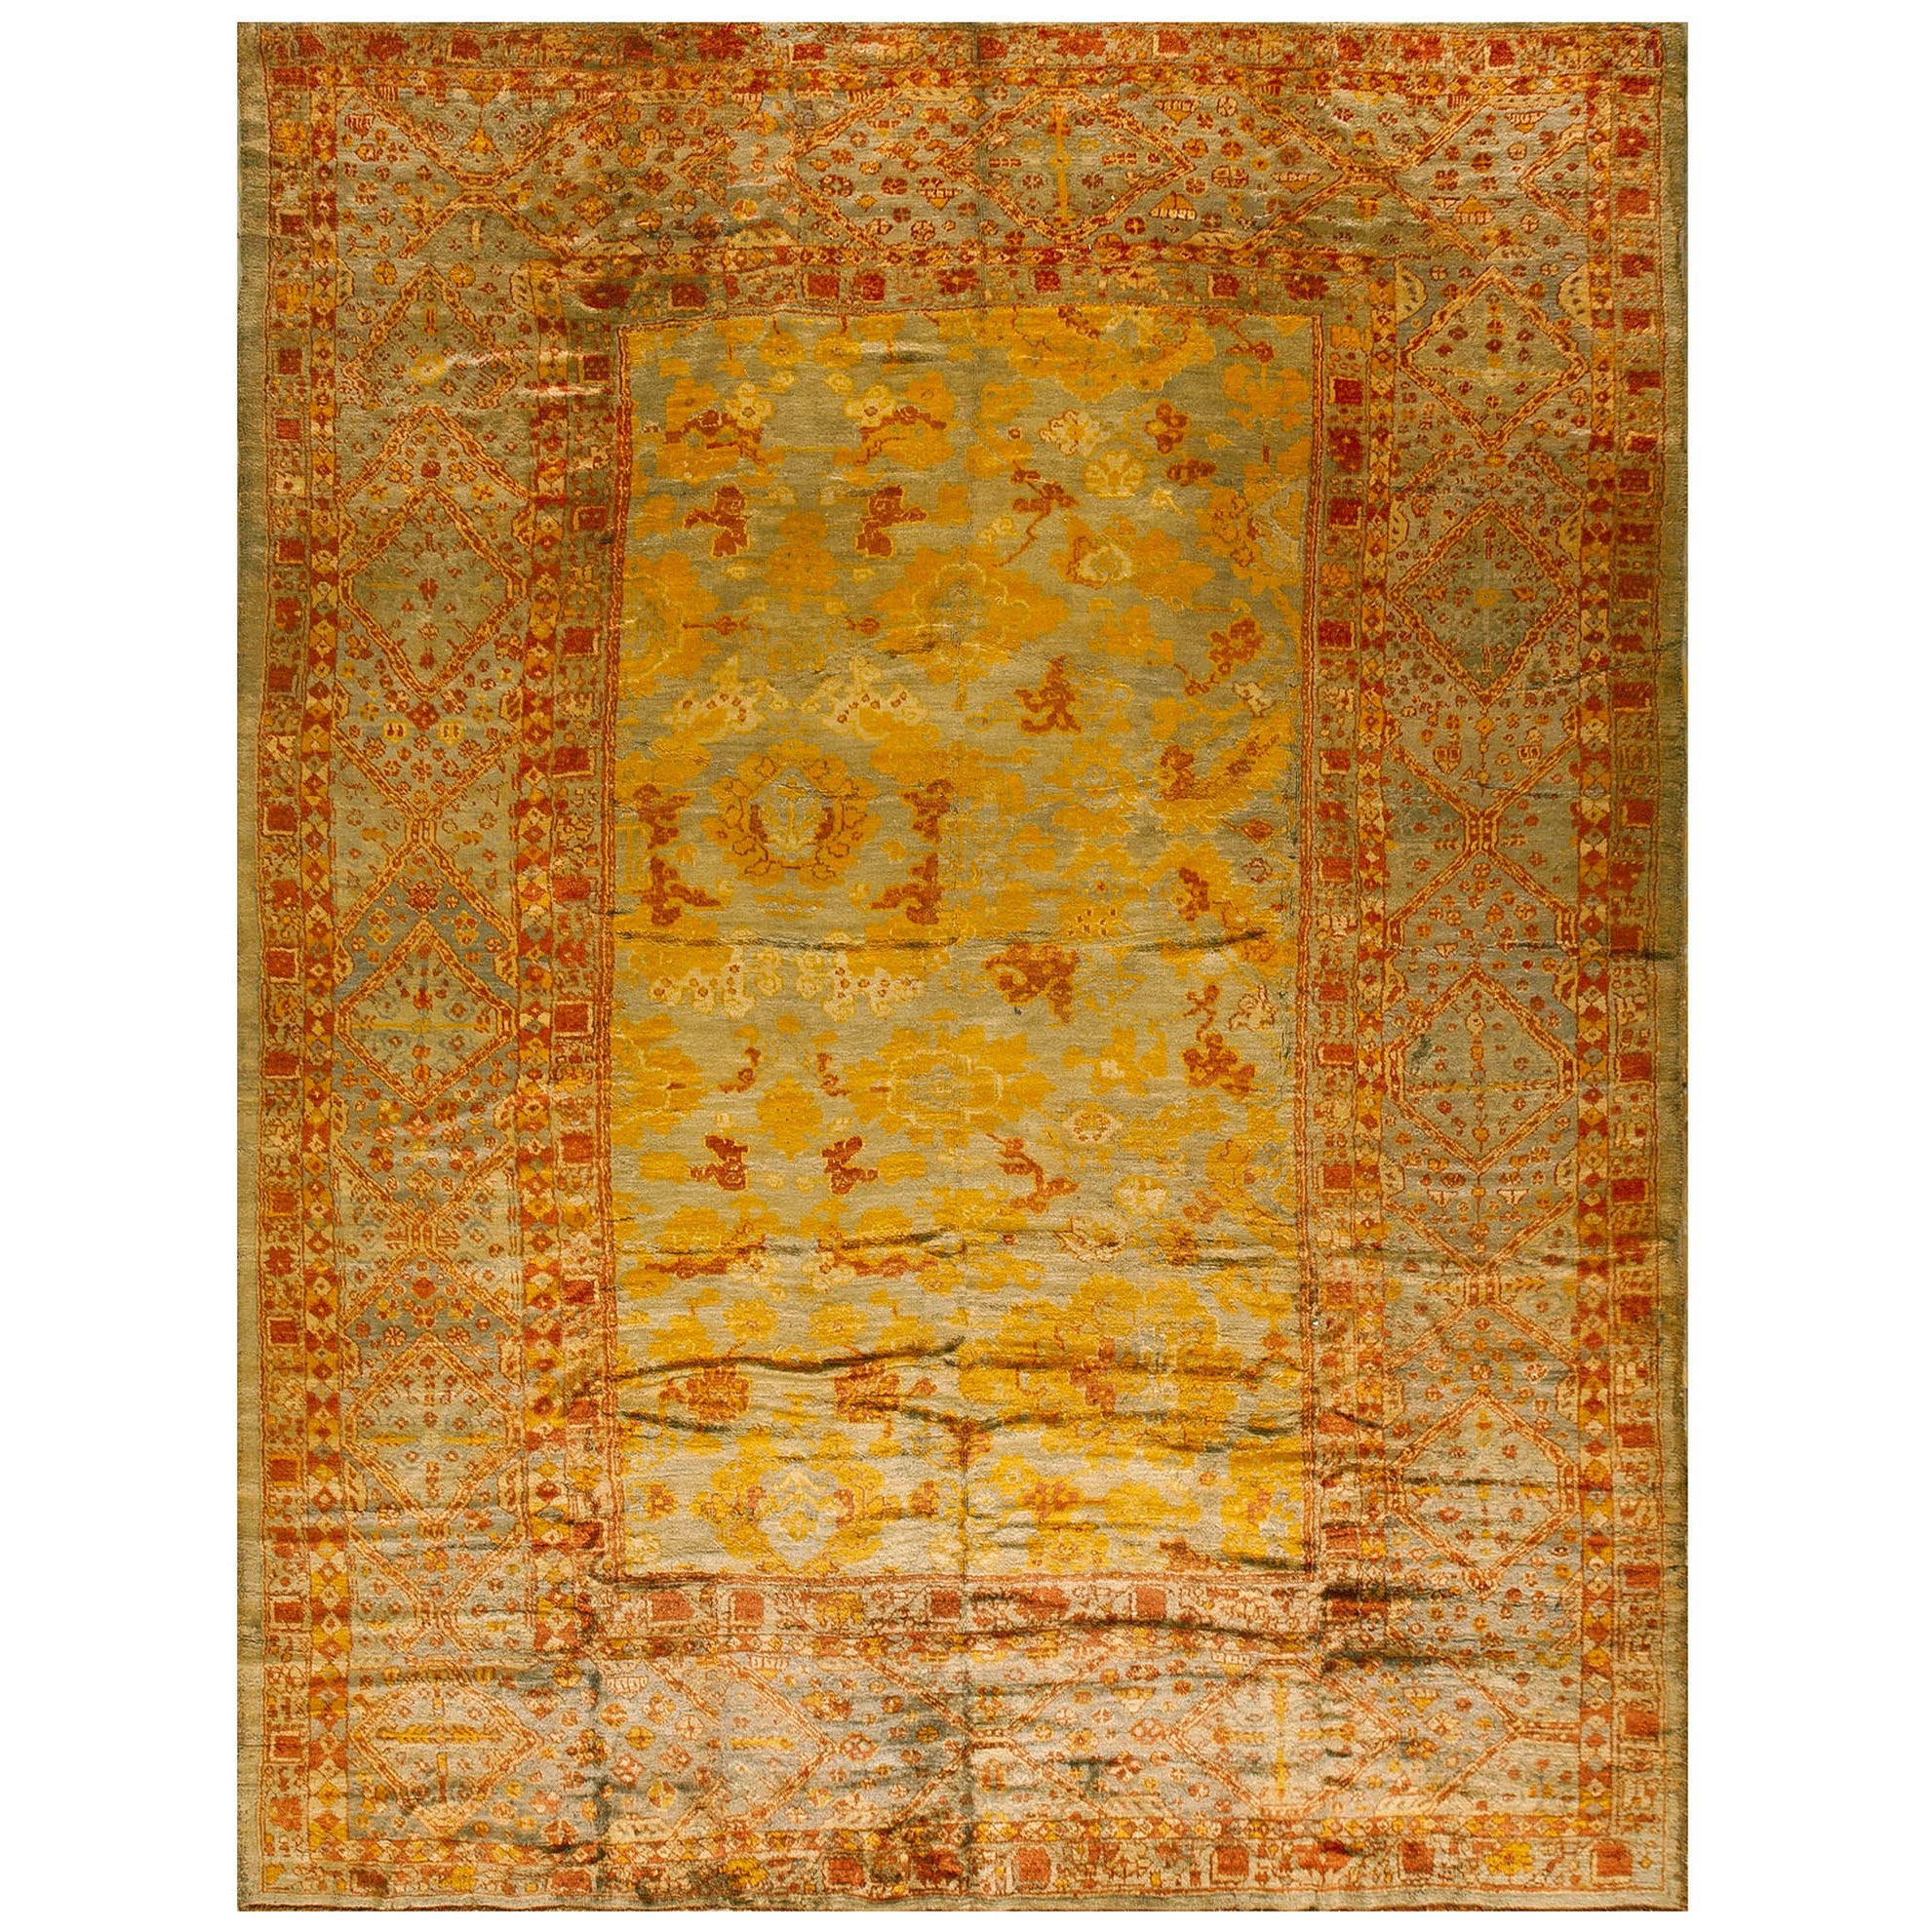 19th Century Turkish Angora Oushak Carpet ( 10'1" x 13'2" - 307 x 401 )